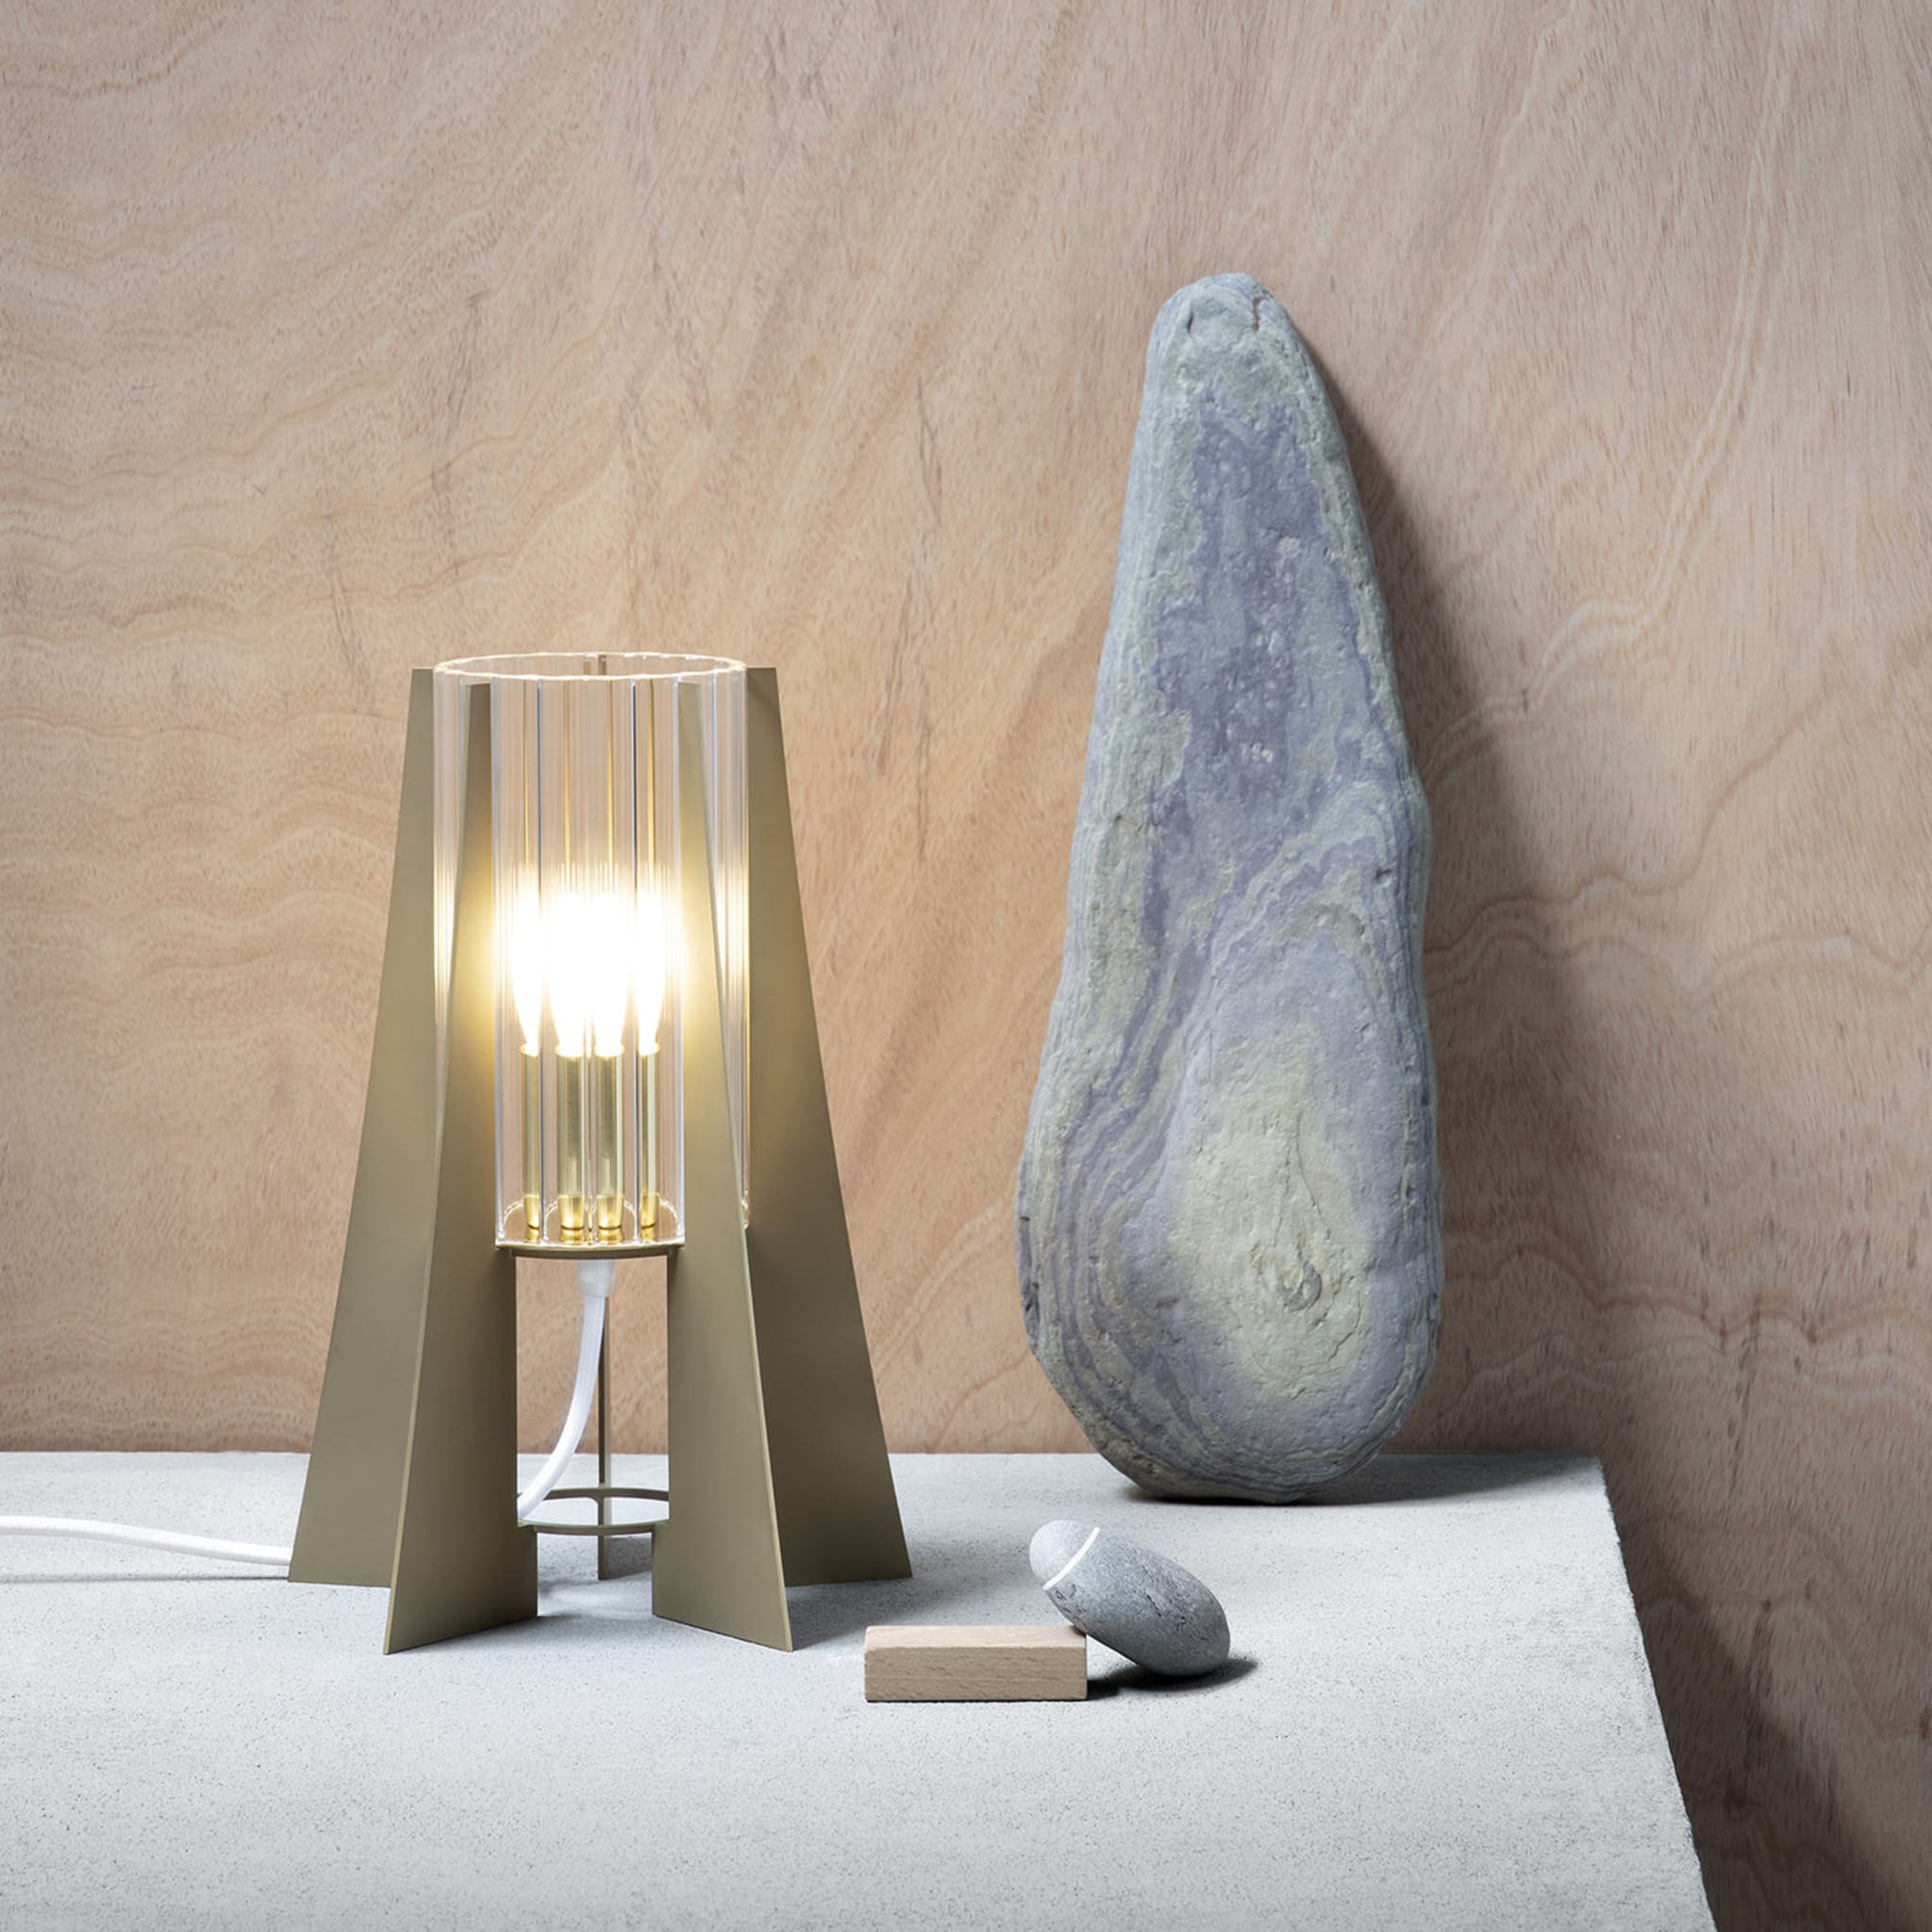 TPLG2 Sandblasted Table Lamp by GoodMorning studio - Alternative view 2